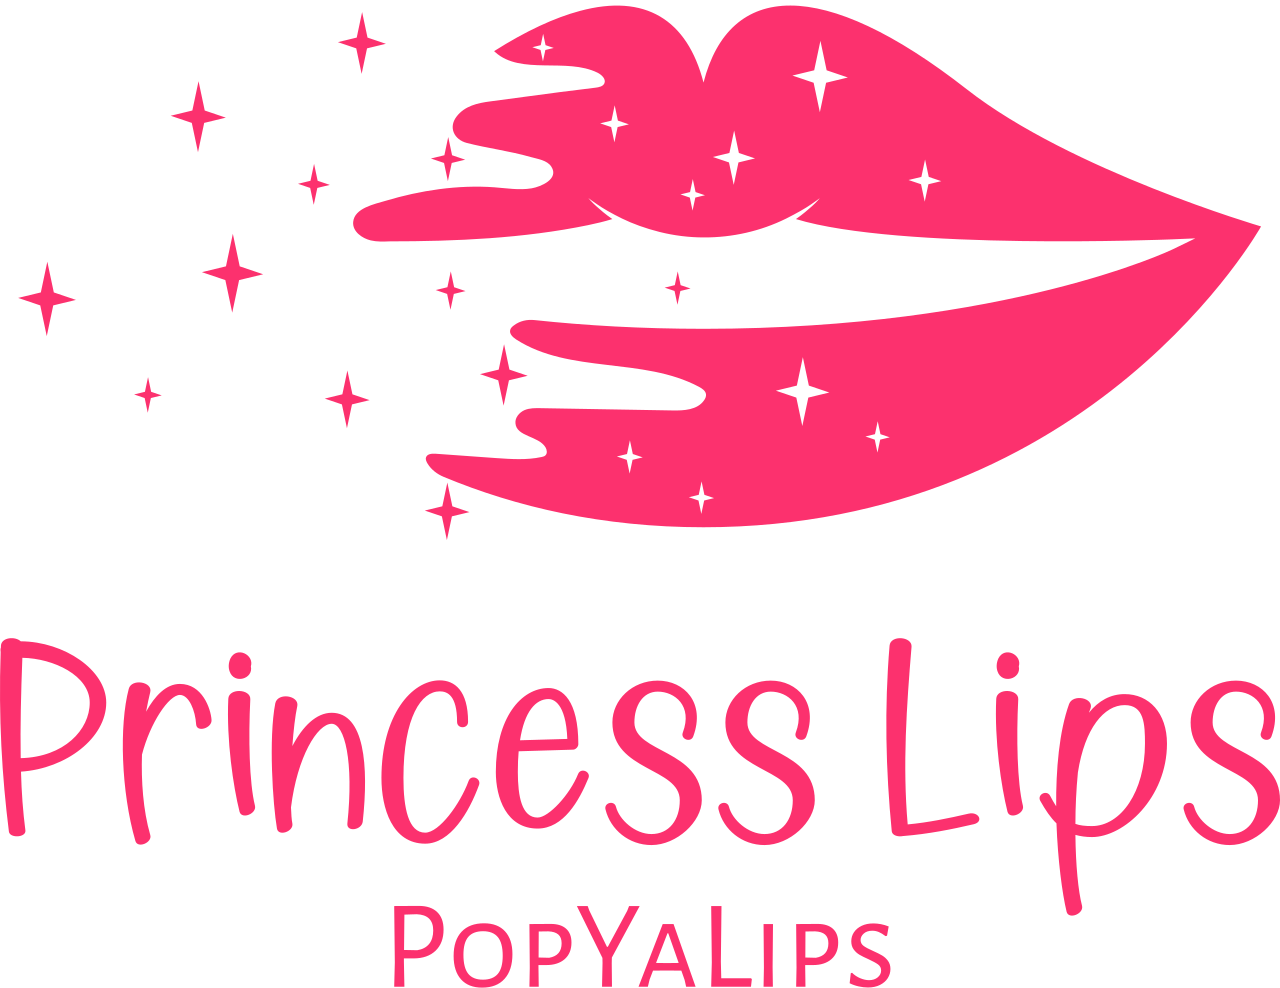 Princess Lips's logo